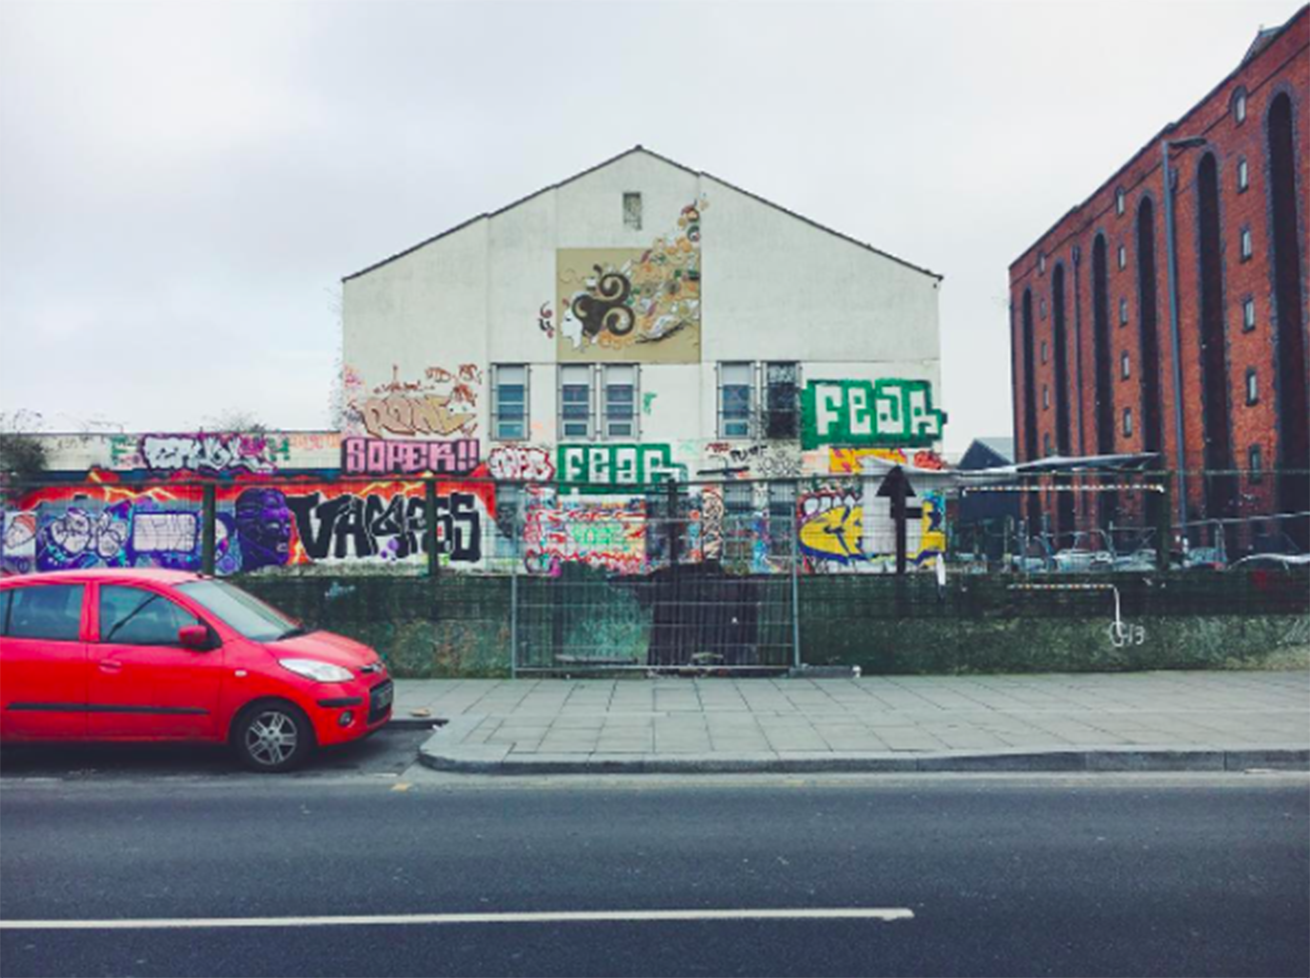 Liverpool blogger instagram, baltic triangle skate park street art